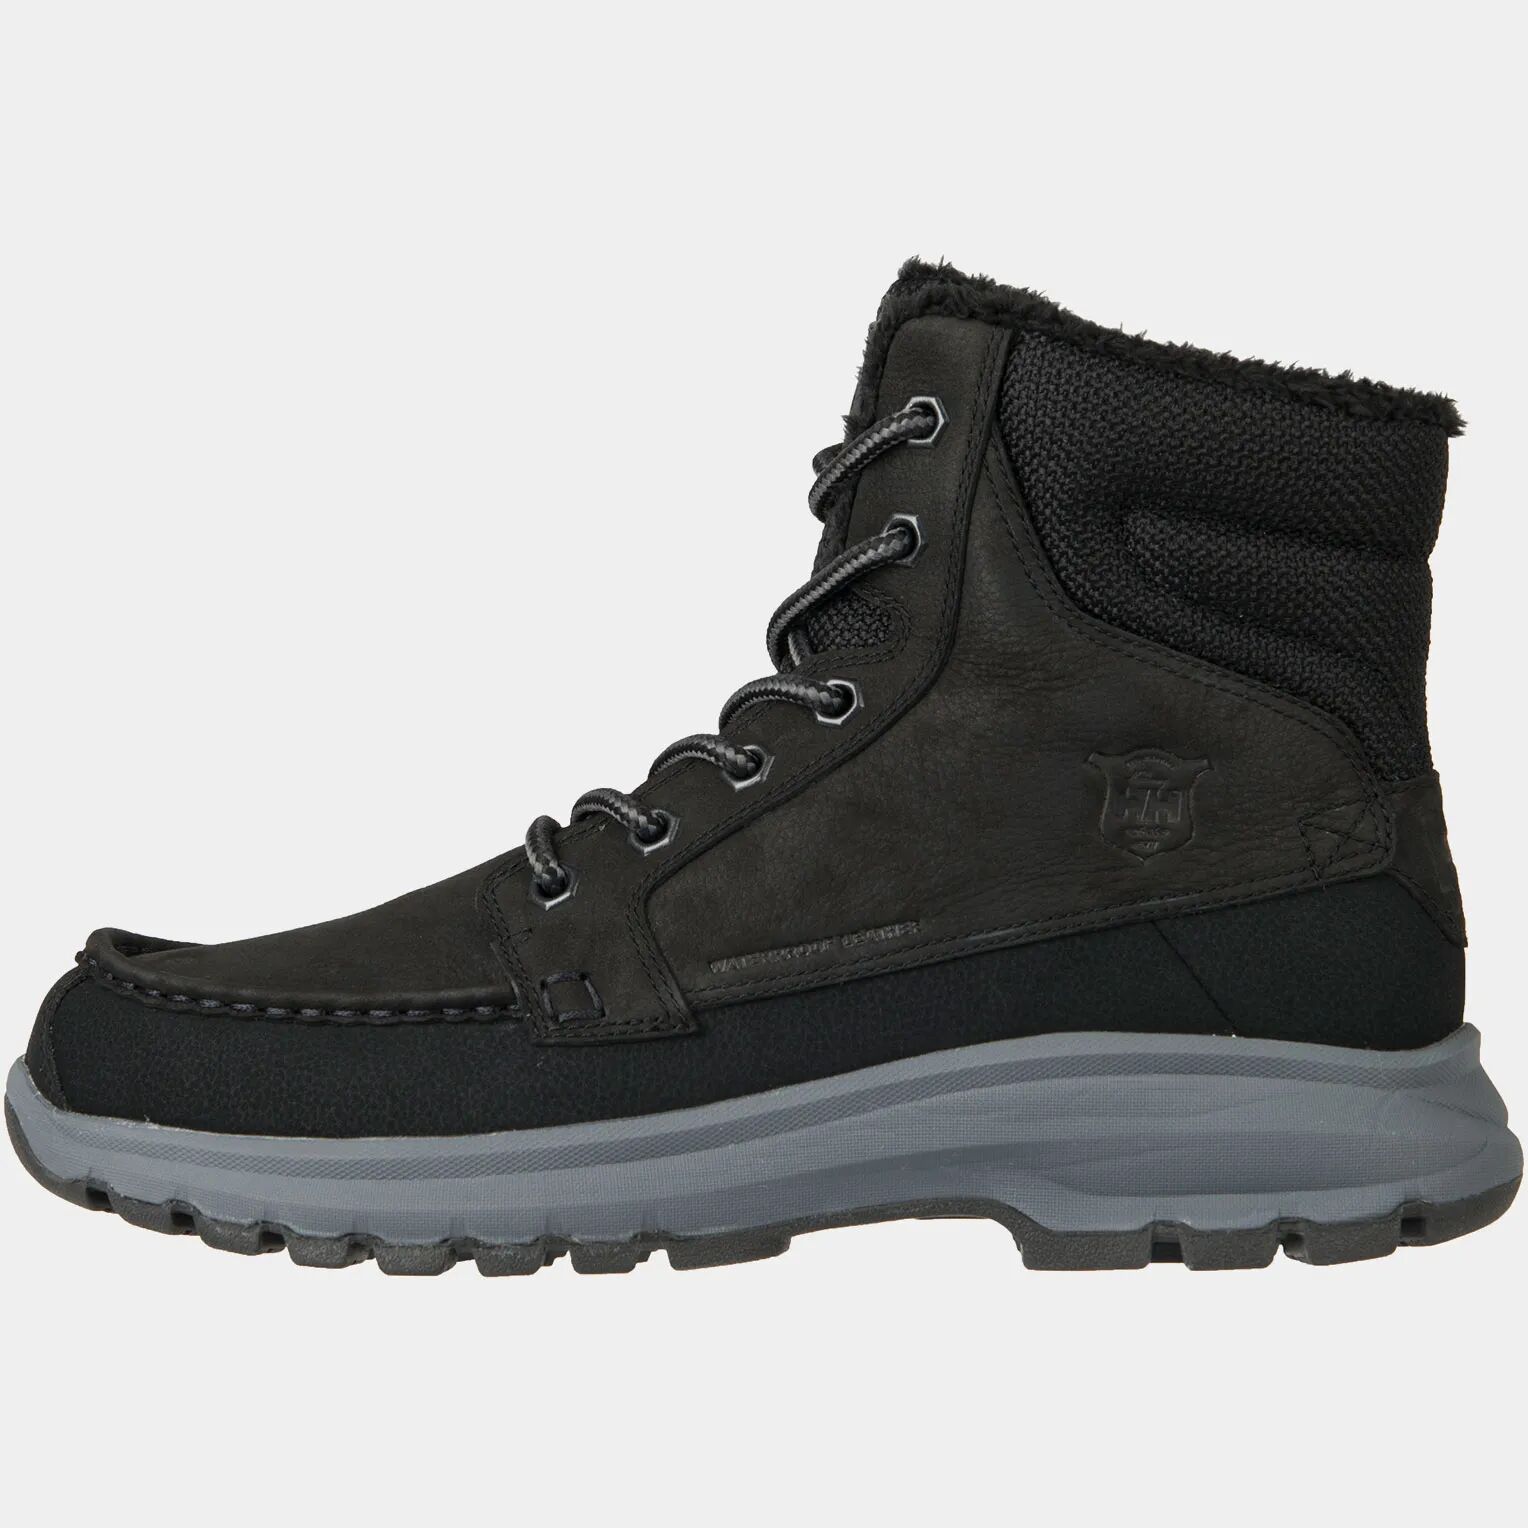 Helly Hansen Men's Garibaldi V3 Waterproof Leather Boots Black 7